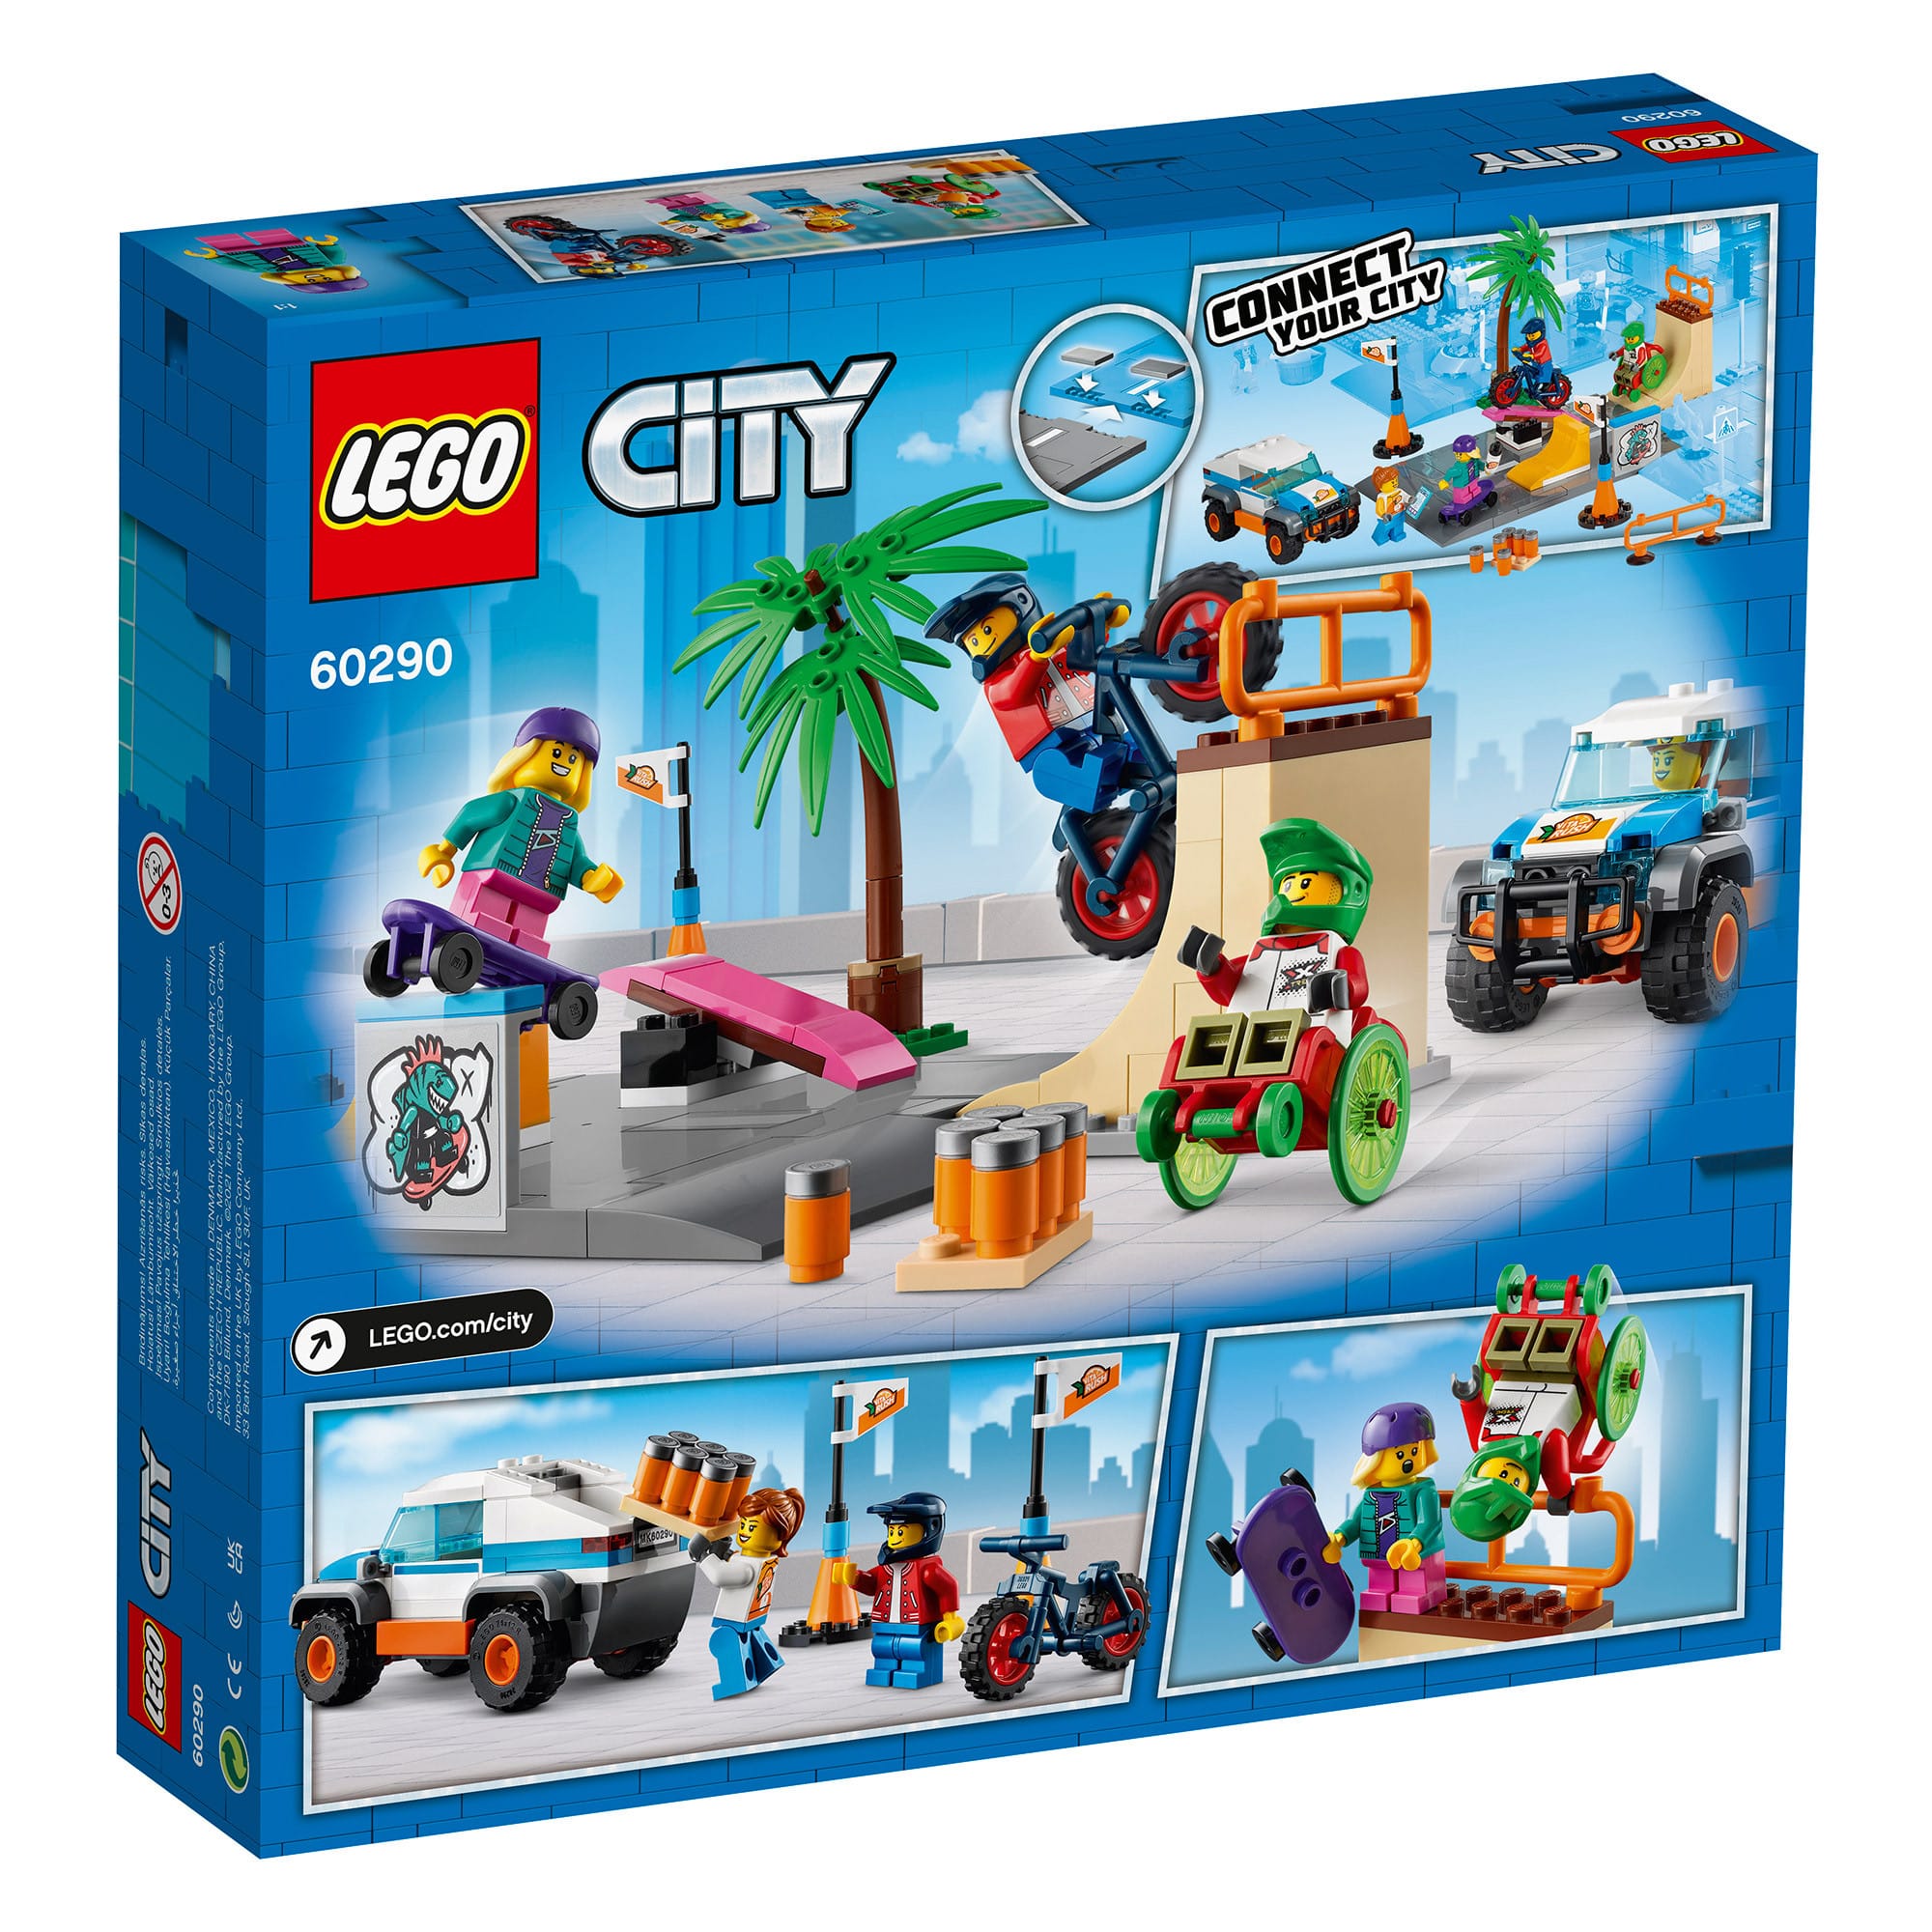 LEGO City - 60289 Airshow Jet Transport